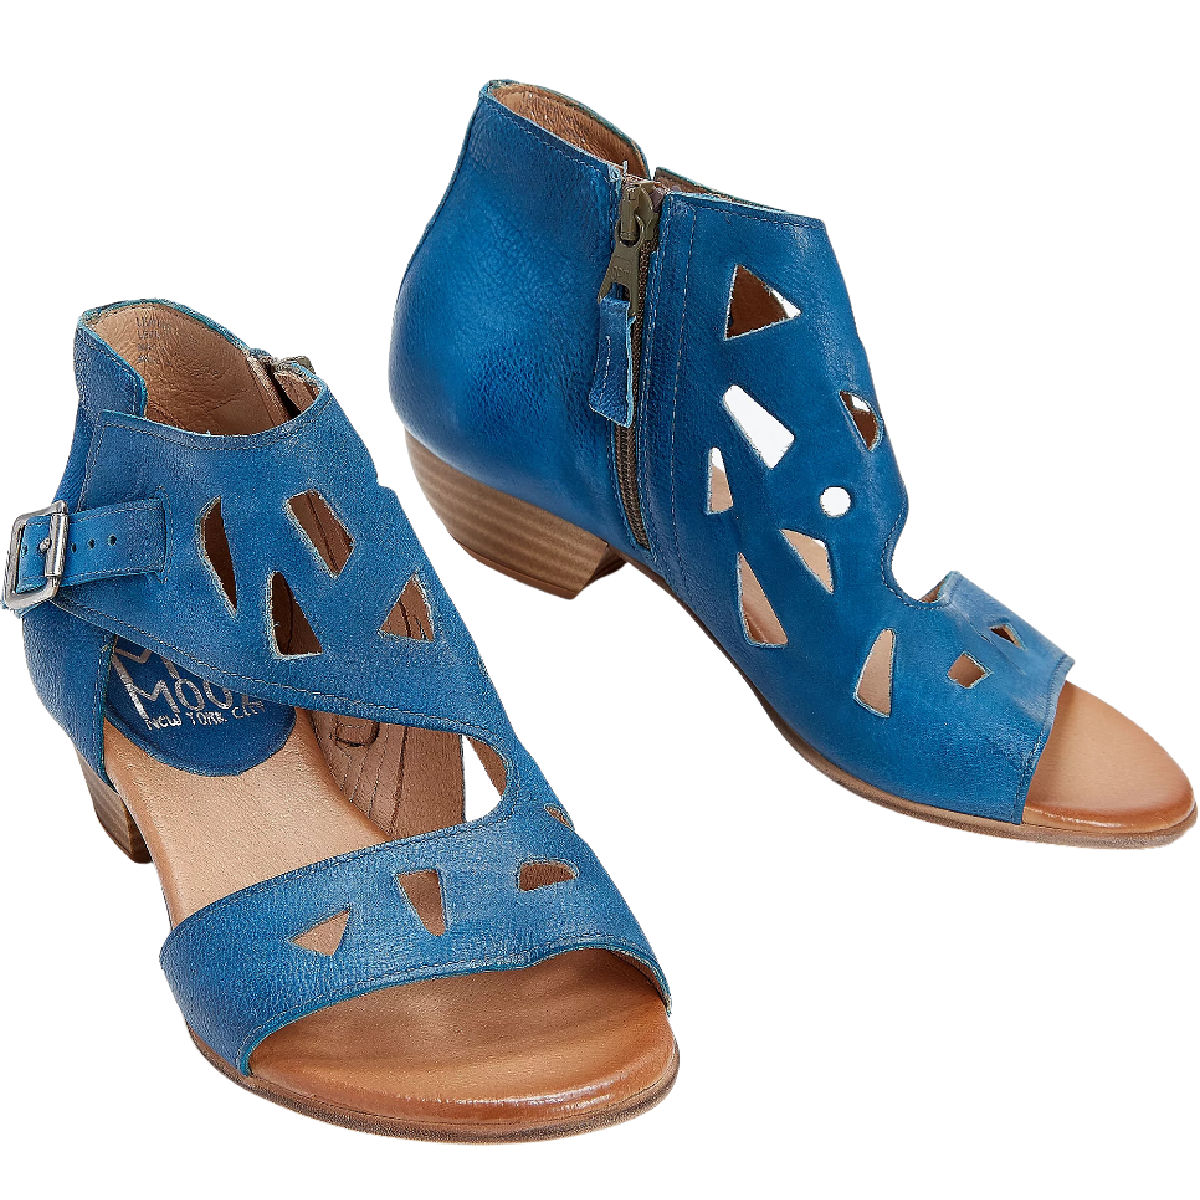 Miz Mooz Current Leather Cutout Sandals